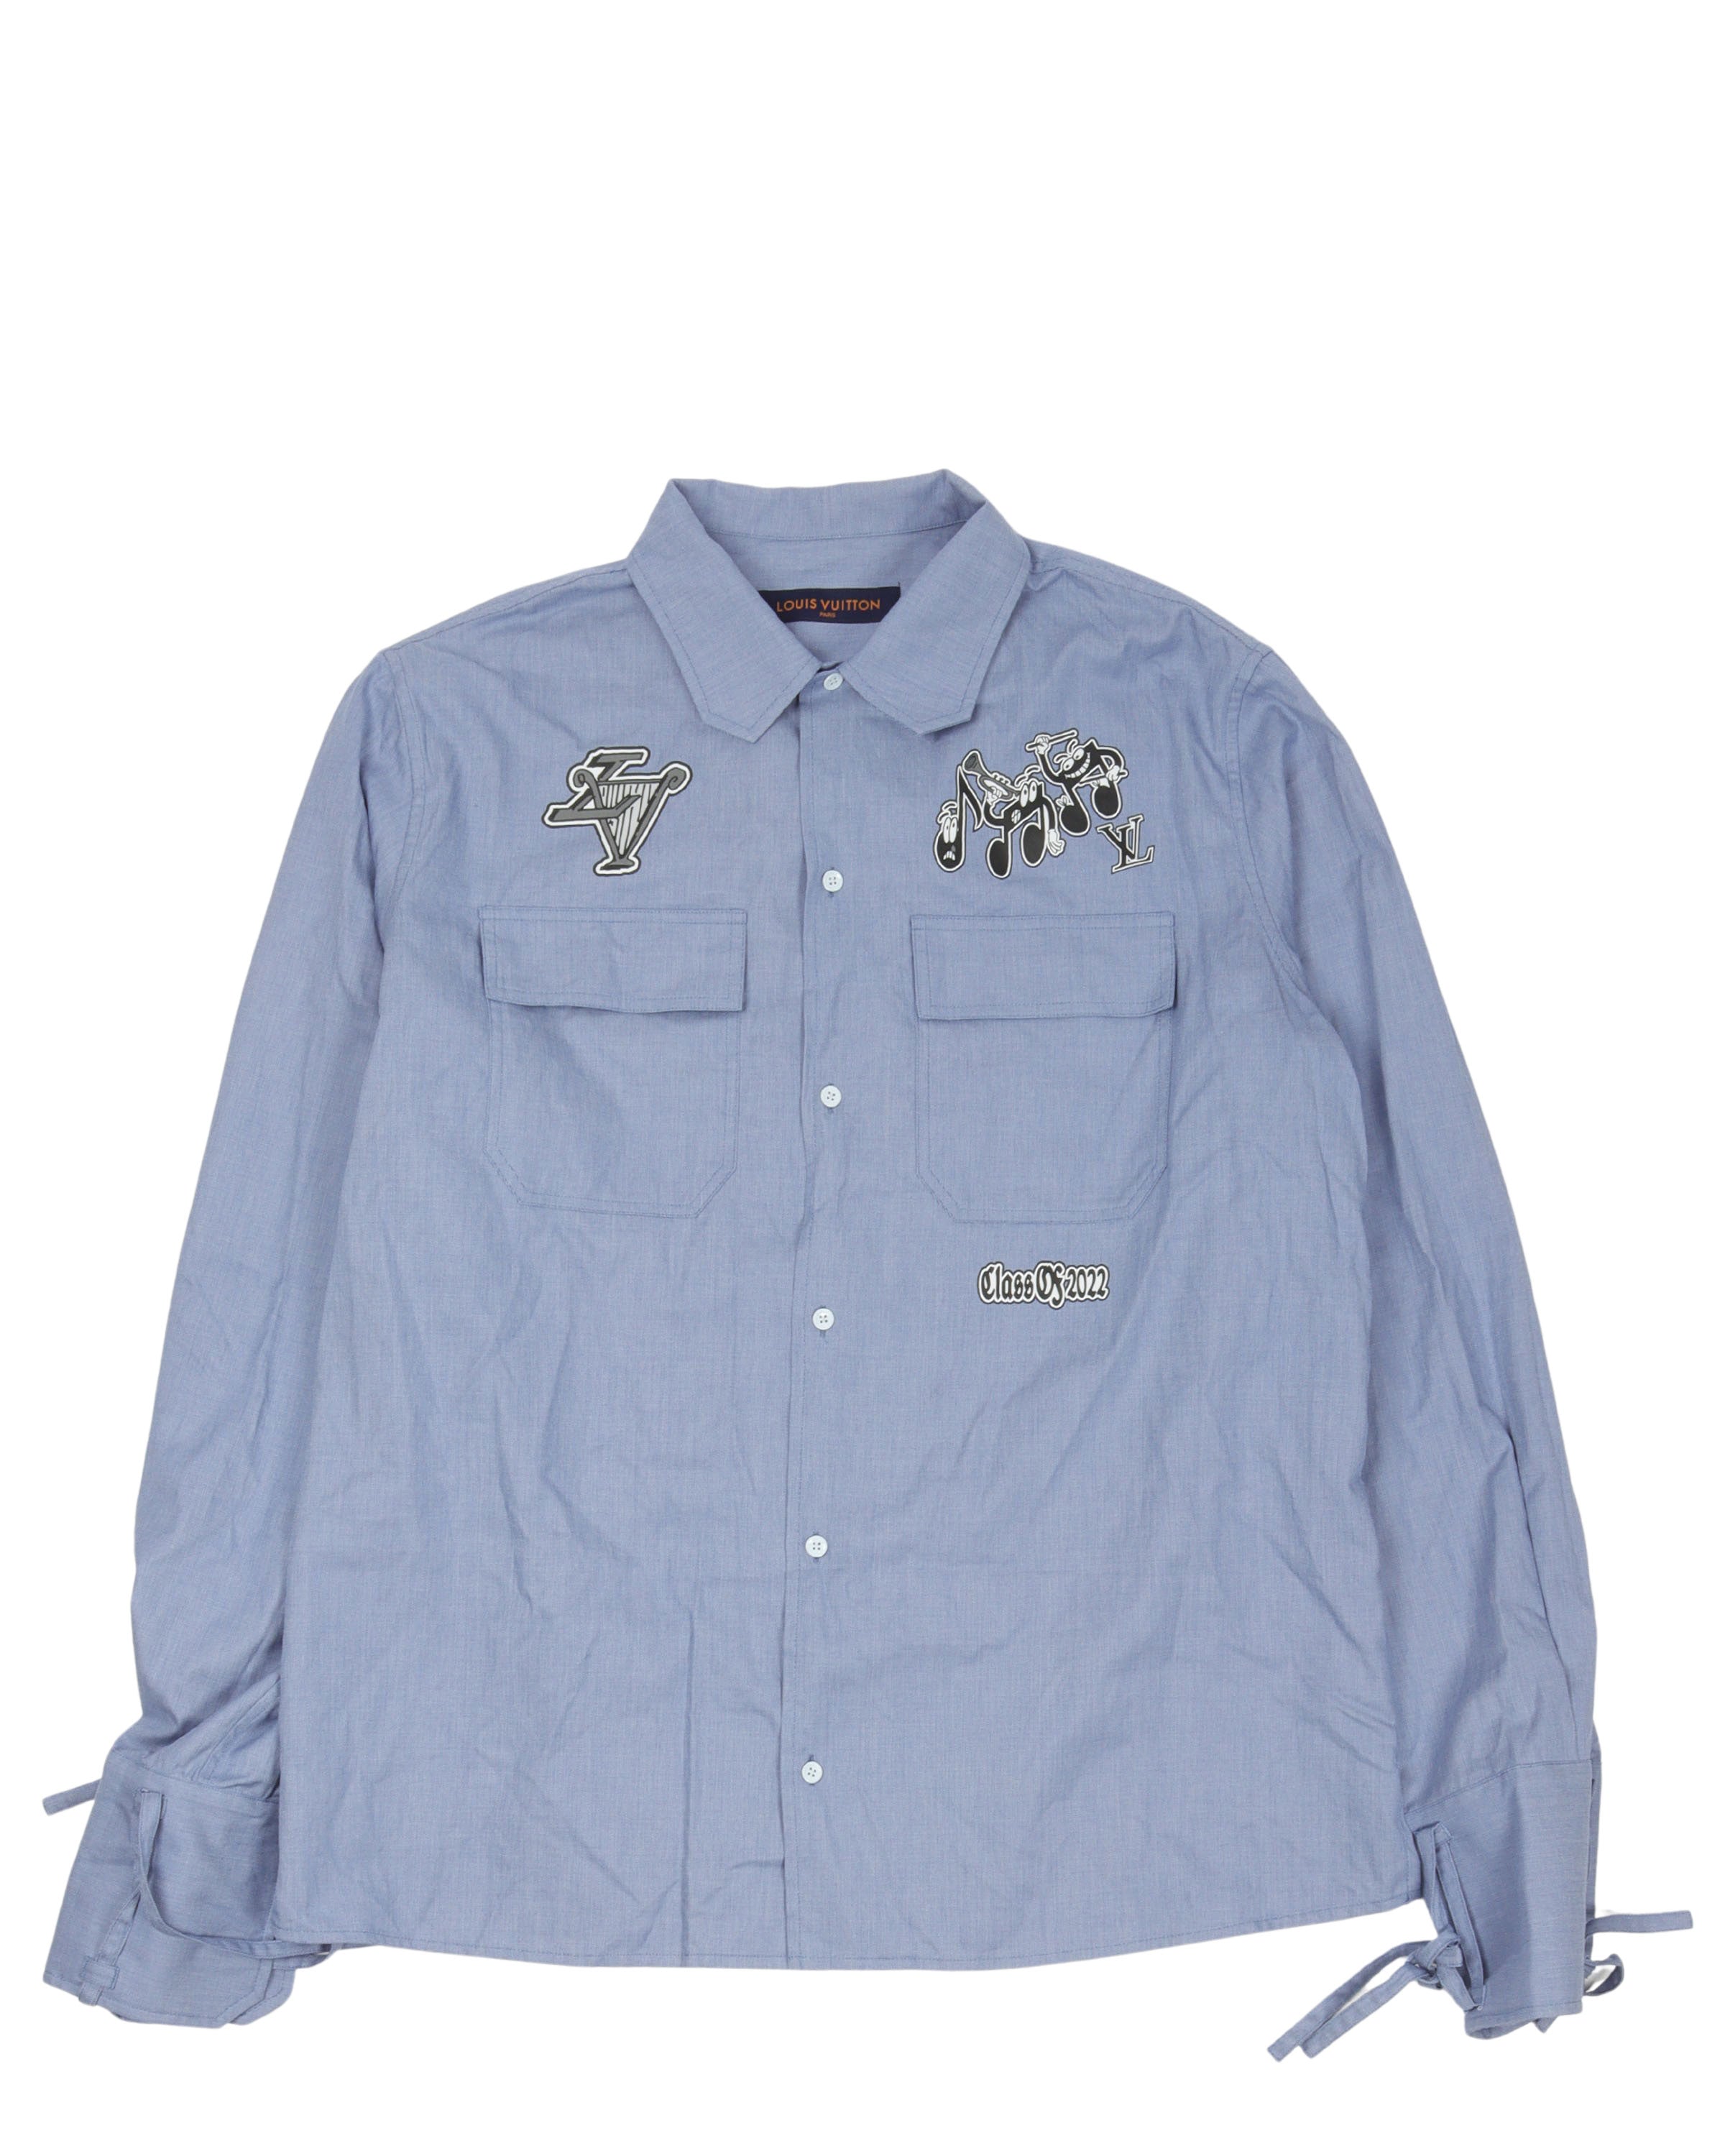 classic striped button down shirt with denim shorts, Louis Vuitton